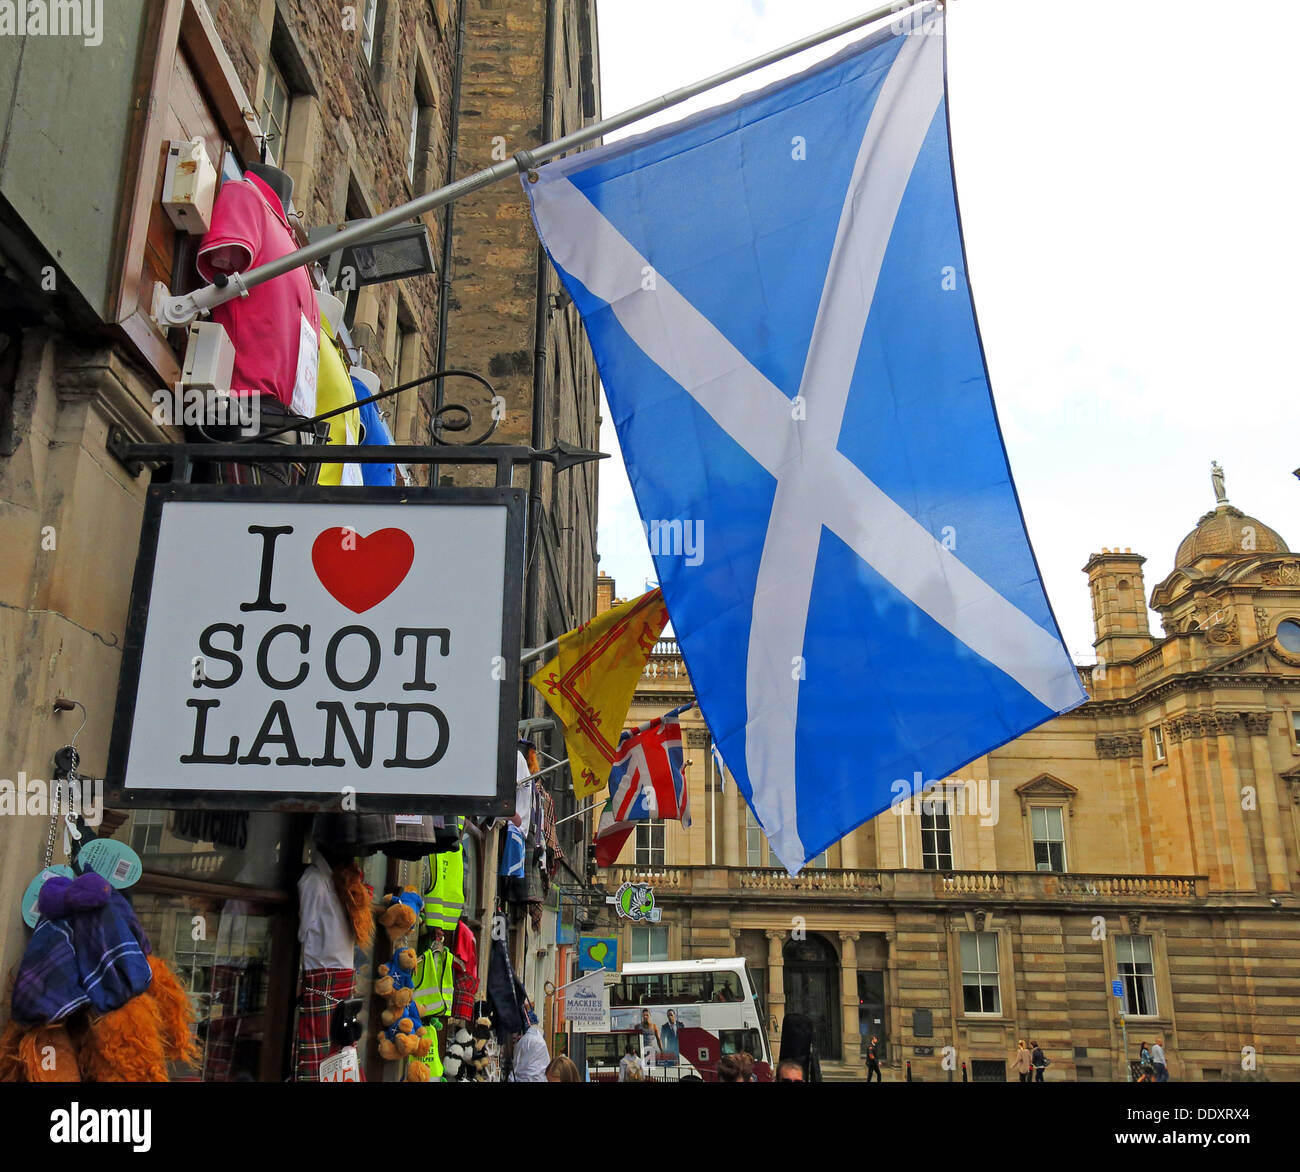 I love Scot Land shop Edinburgh Scotland UK with Scottish flag the saltire white cross on blue background Stock Photo